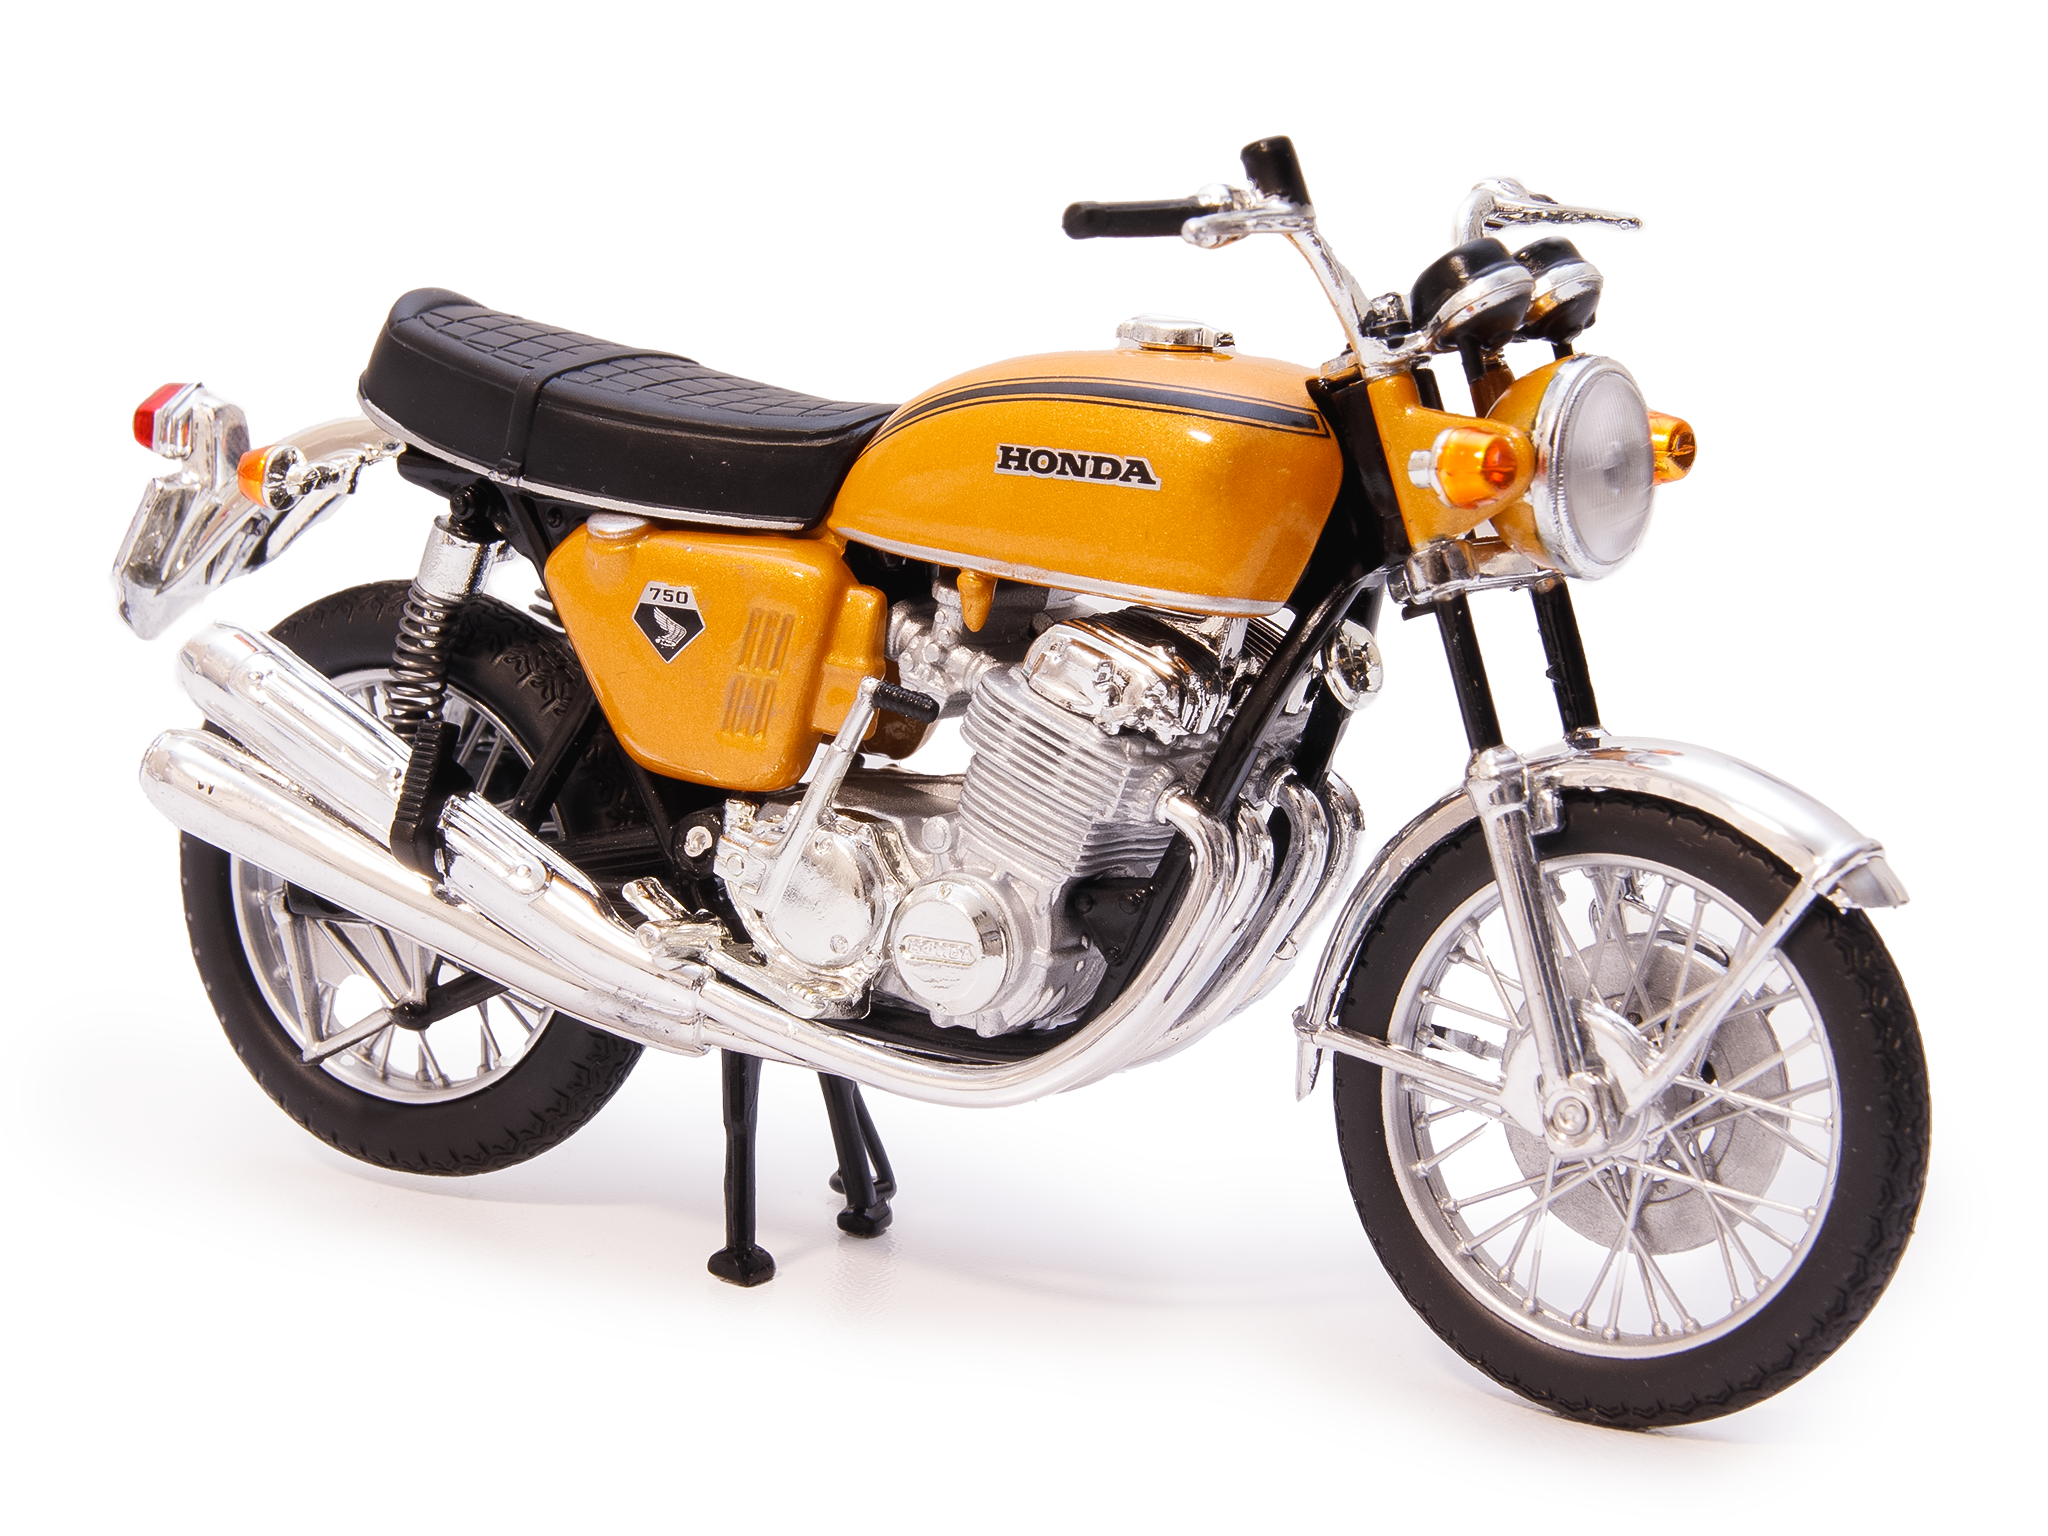 Honda CB750 1969 orange - 1:18 Scale